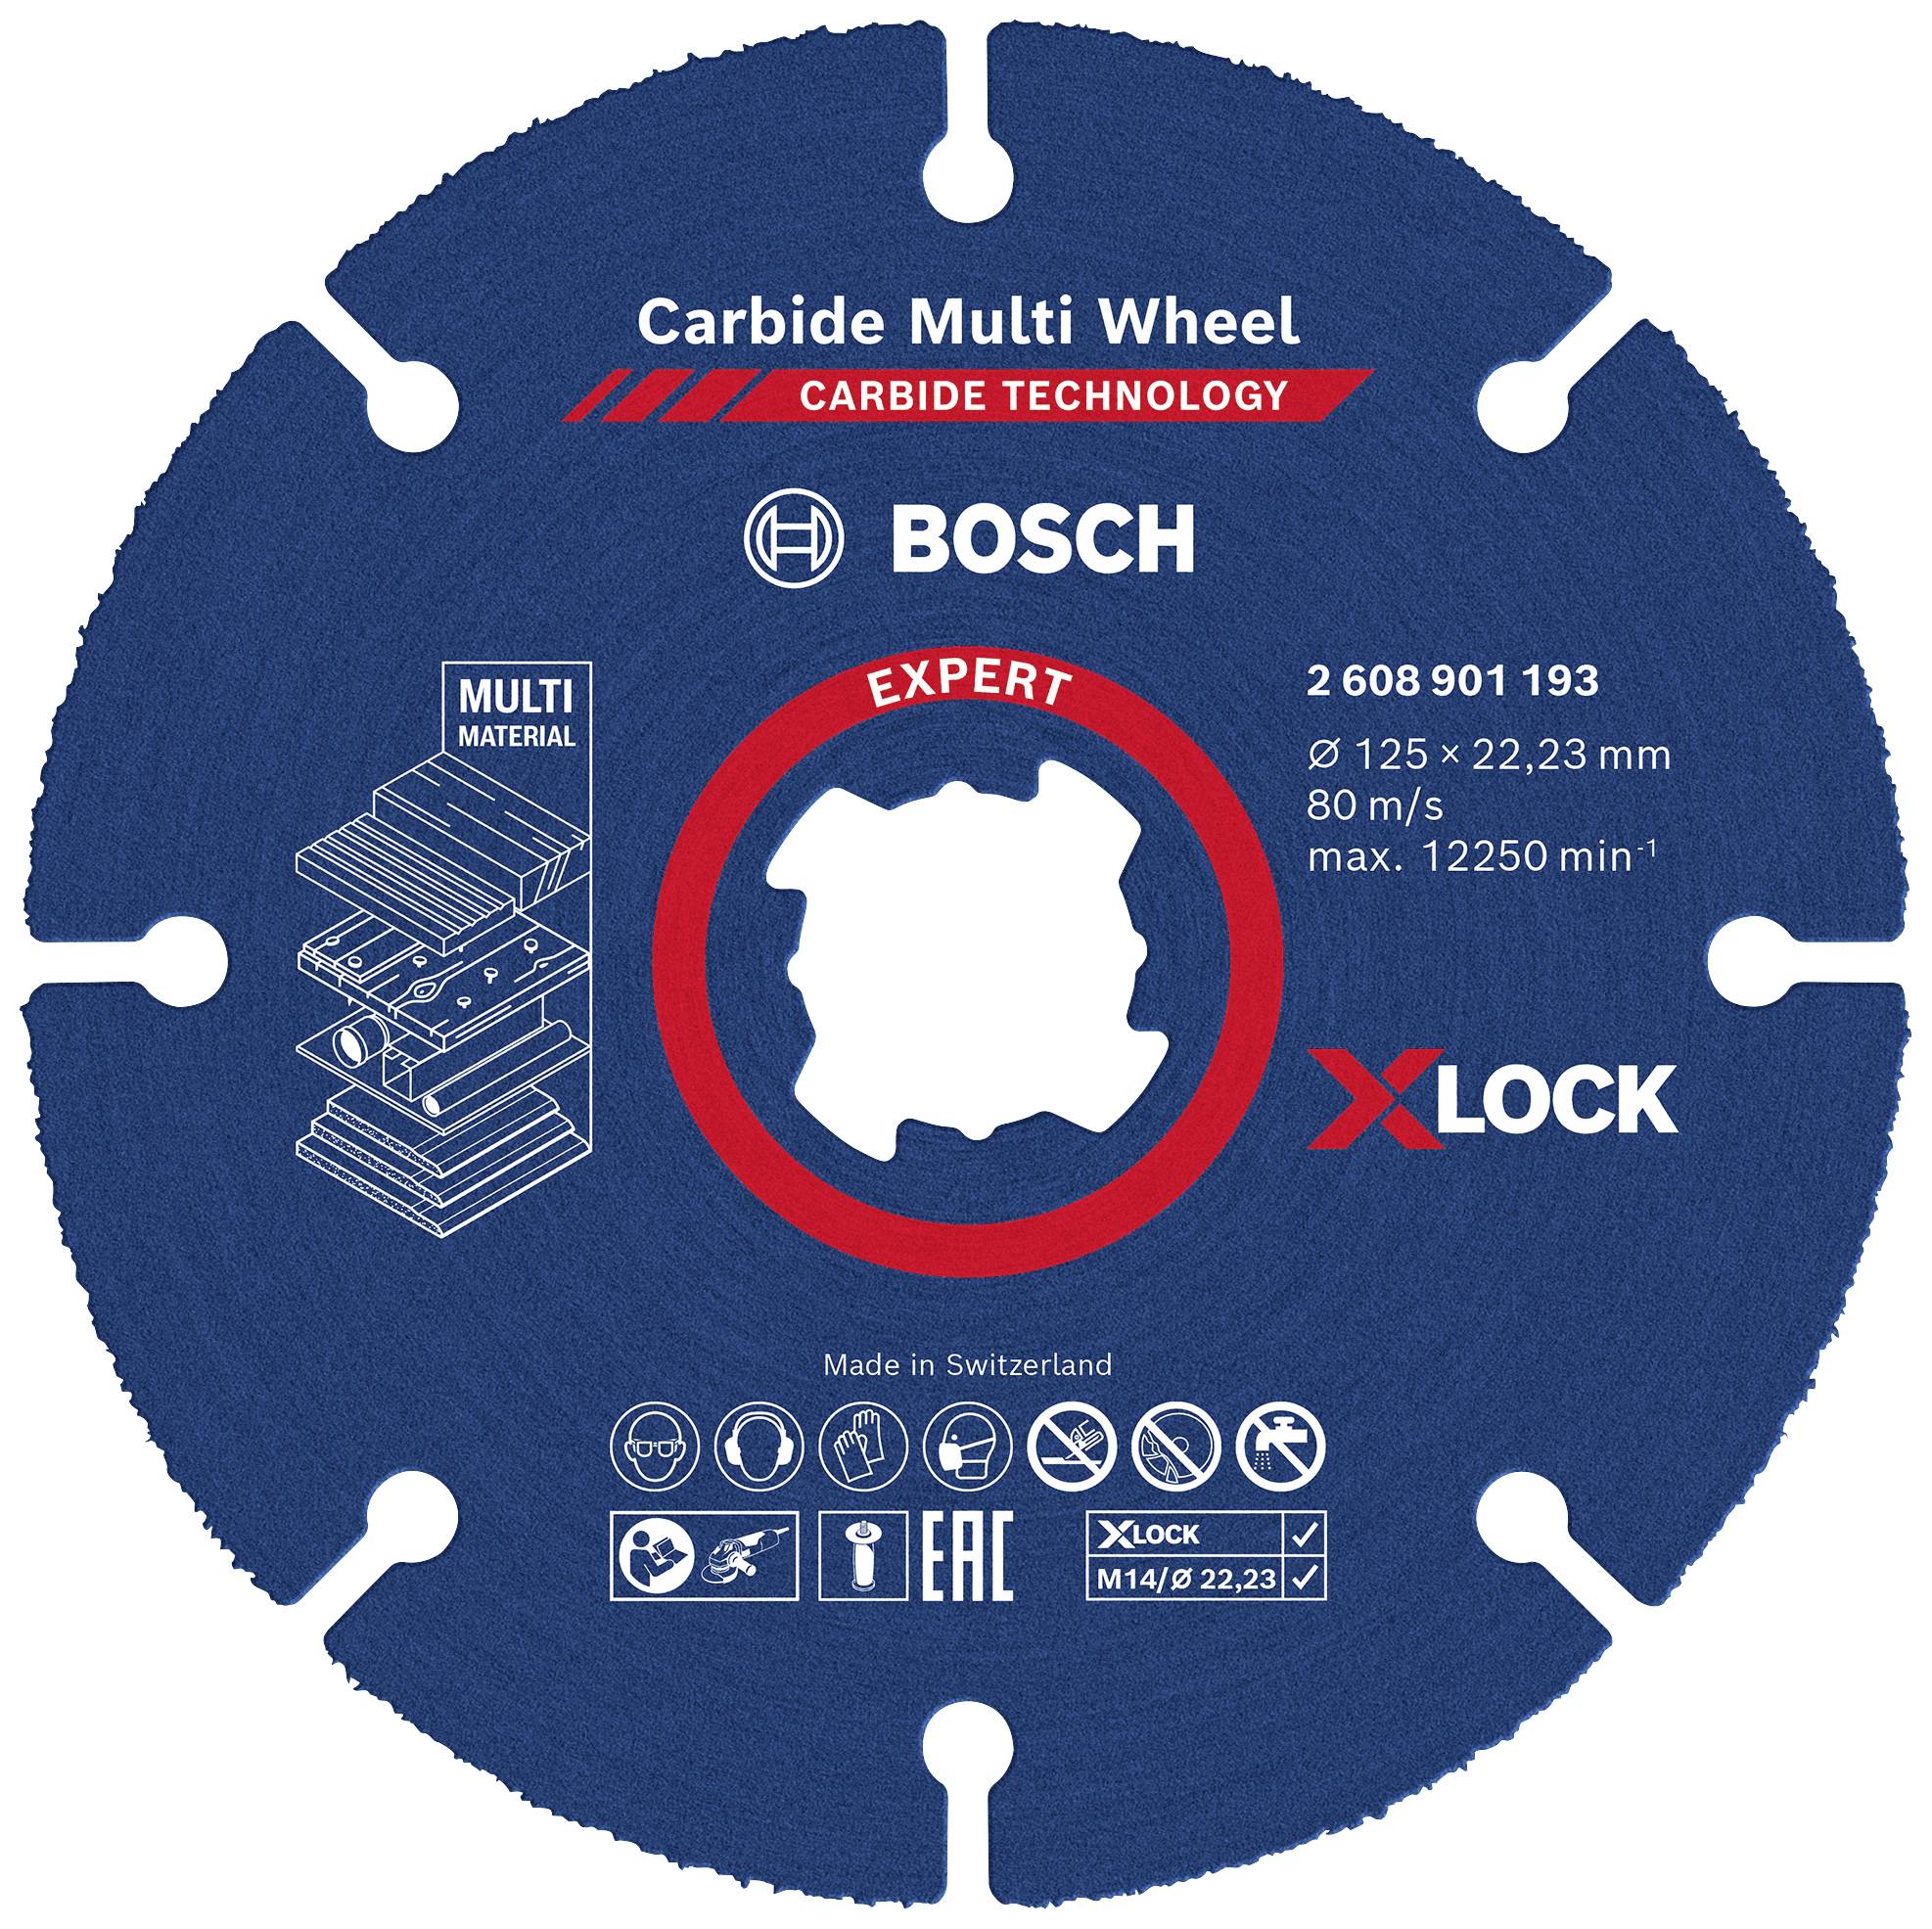 BOSCH Accessories EXPERT Carbide Multi Wheel X-LOCK 2608901193 Trennscheibe gerade 1 Stück 125